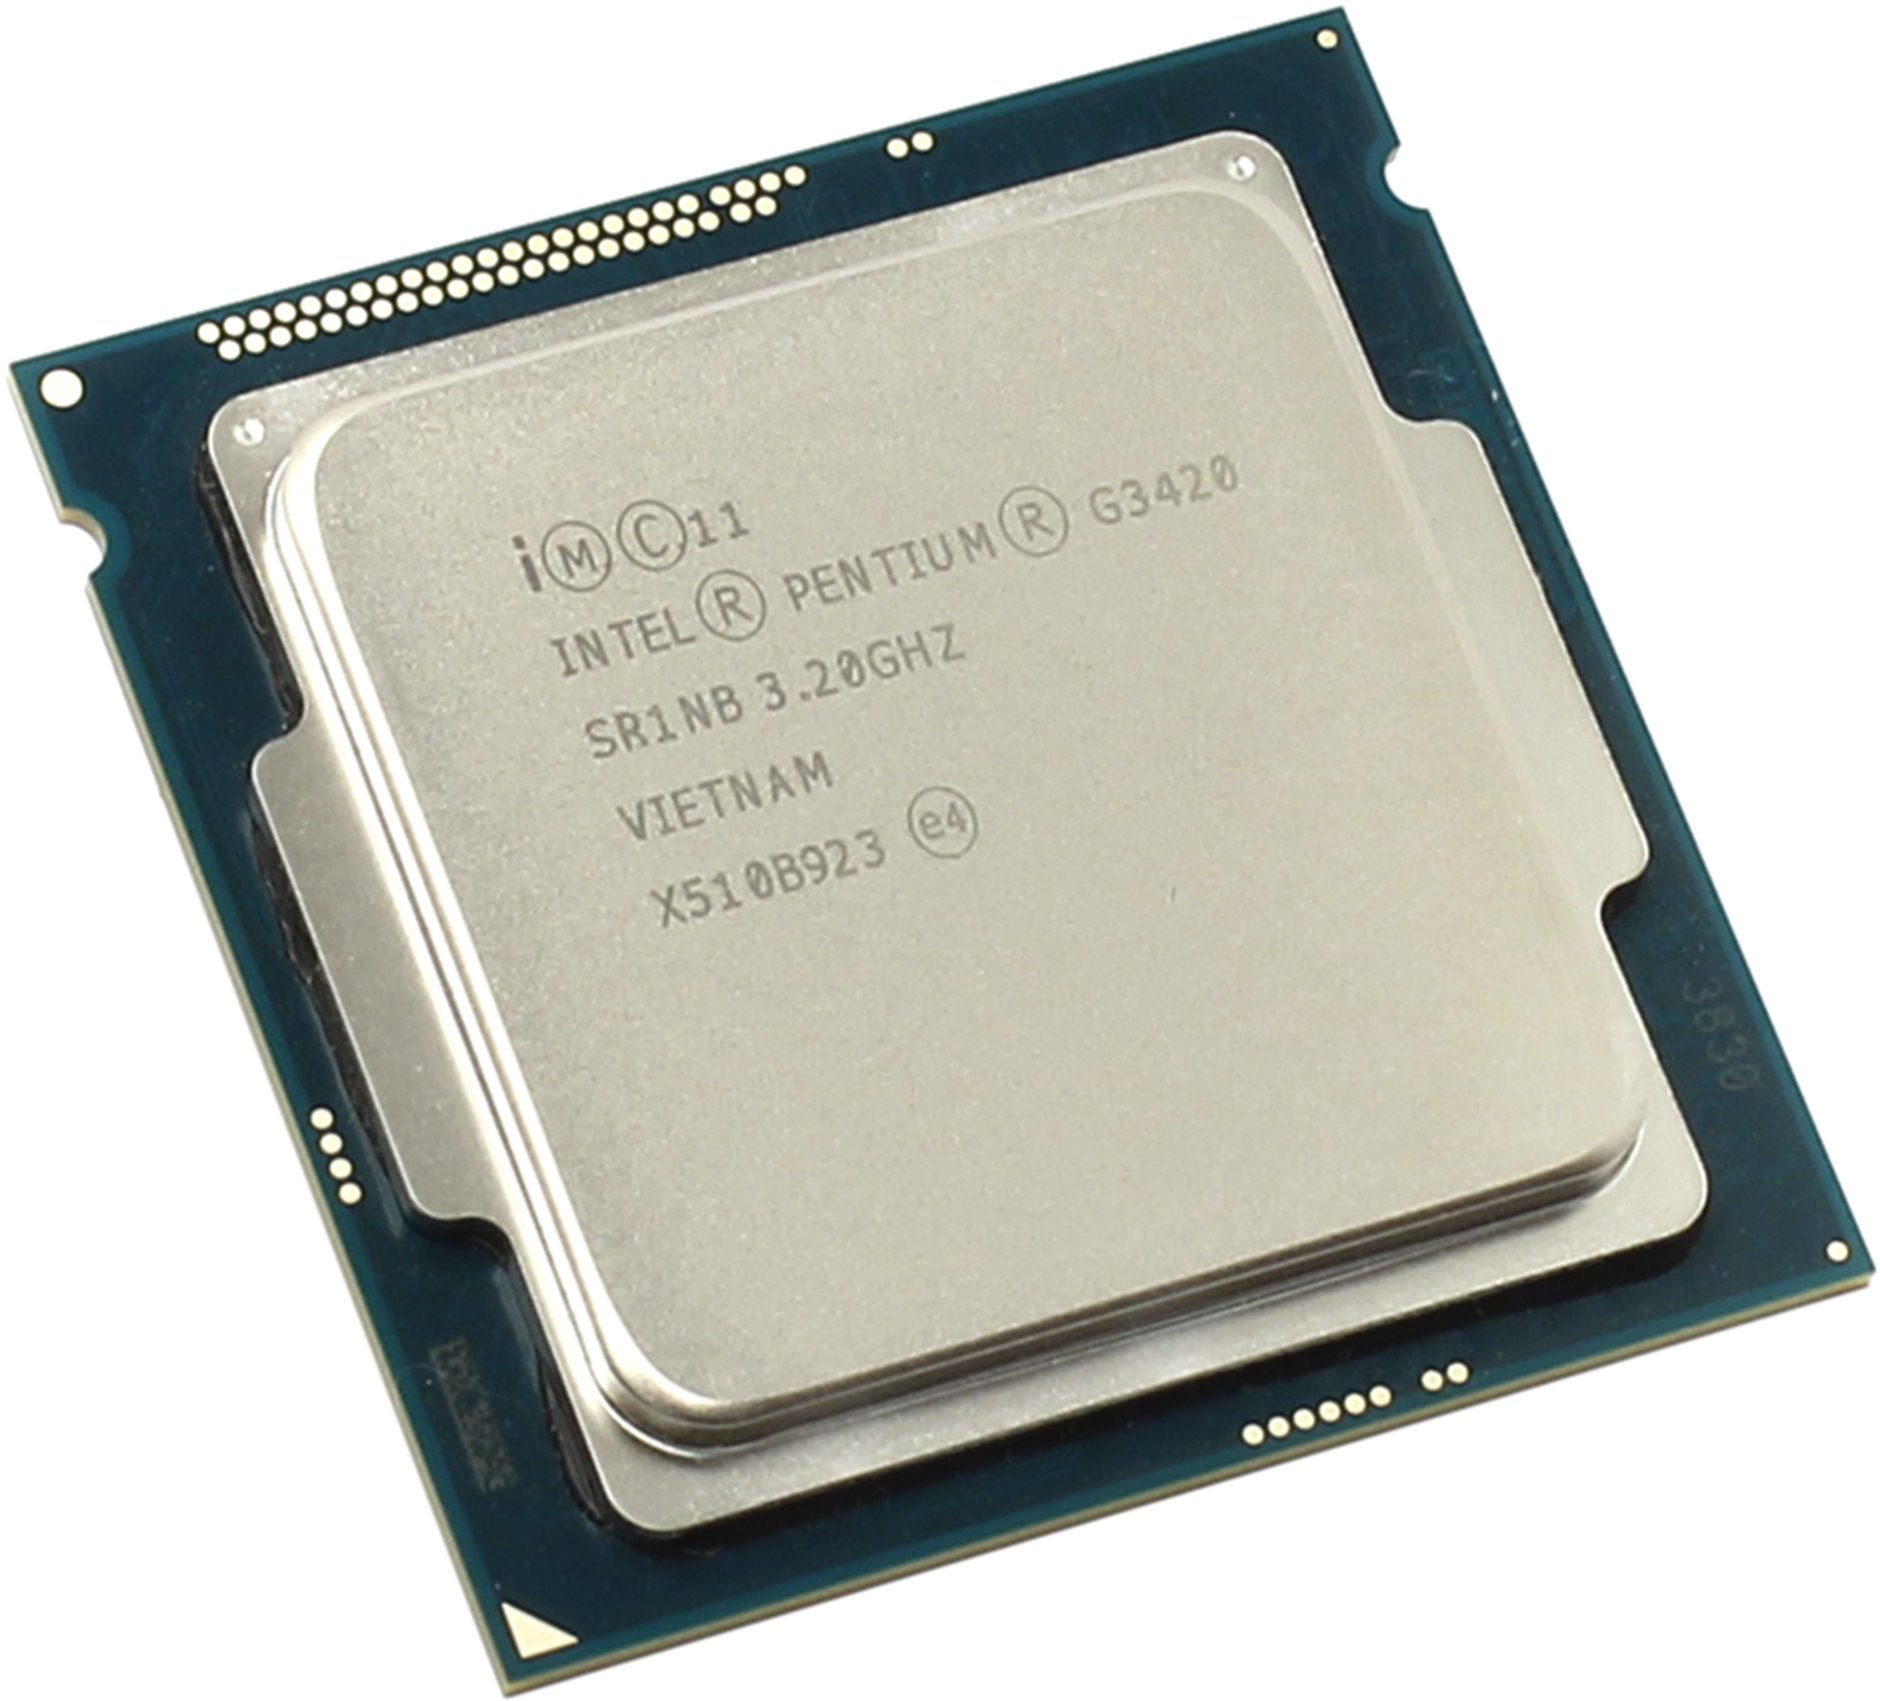 buitenaards wezen Huh toernooi Intel Pentium Processor G3420 3.2GHZ 1150 (Μεταχειρισμένο) στη κατηγορία  Πληροφορική και Tablet/Υπολογιστές/Hardware υπολογιστών/Επεξεργαστές  υπολογιστών στο Easy Technology.